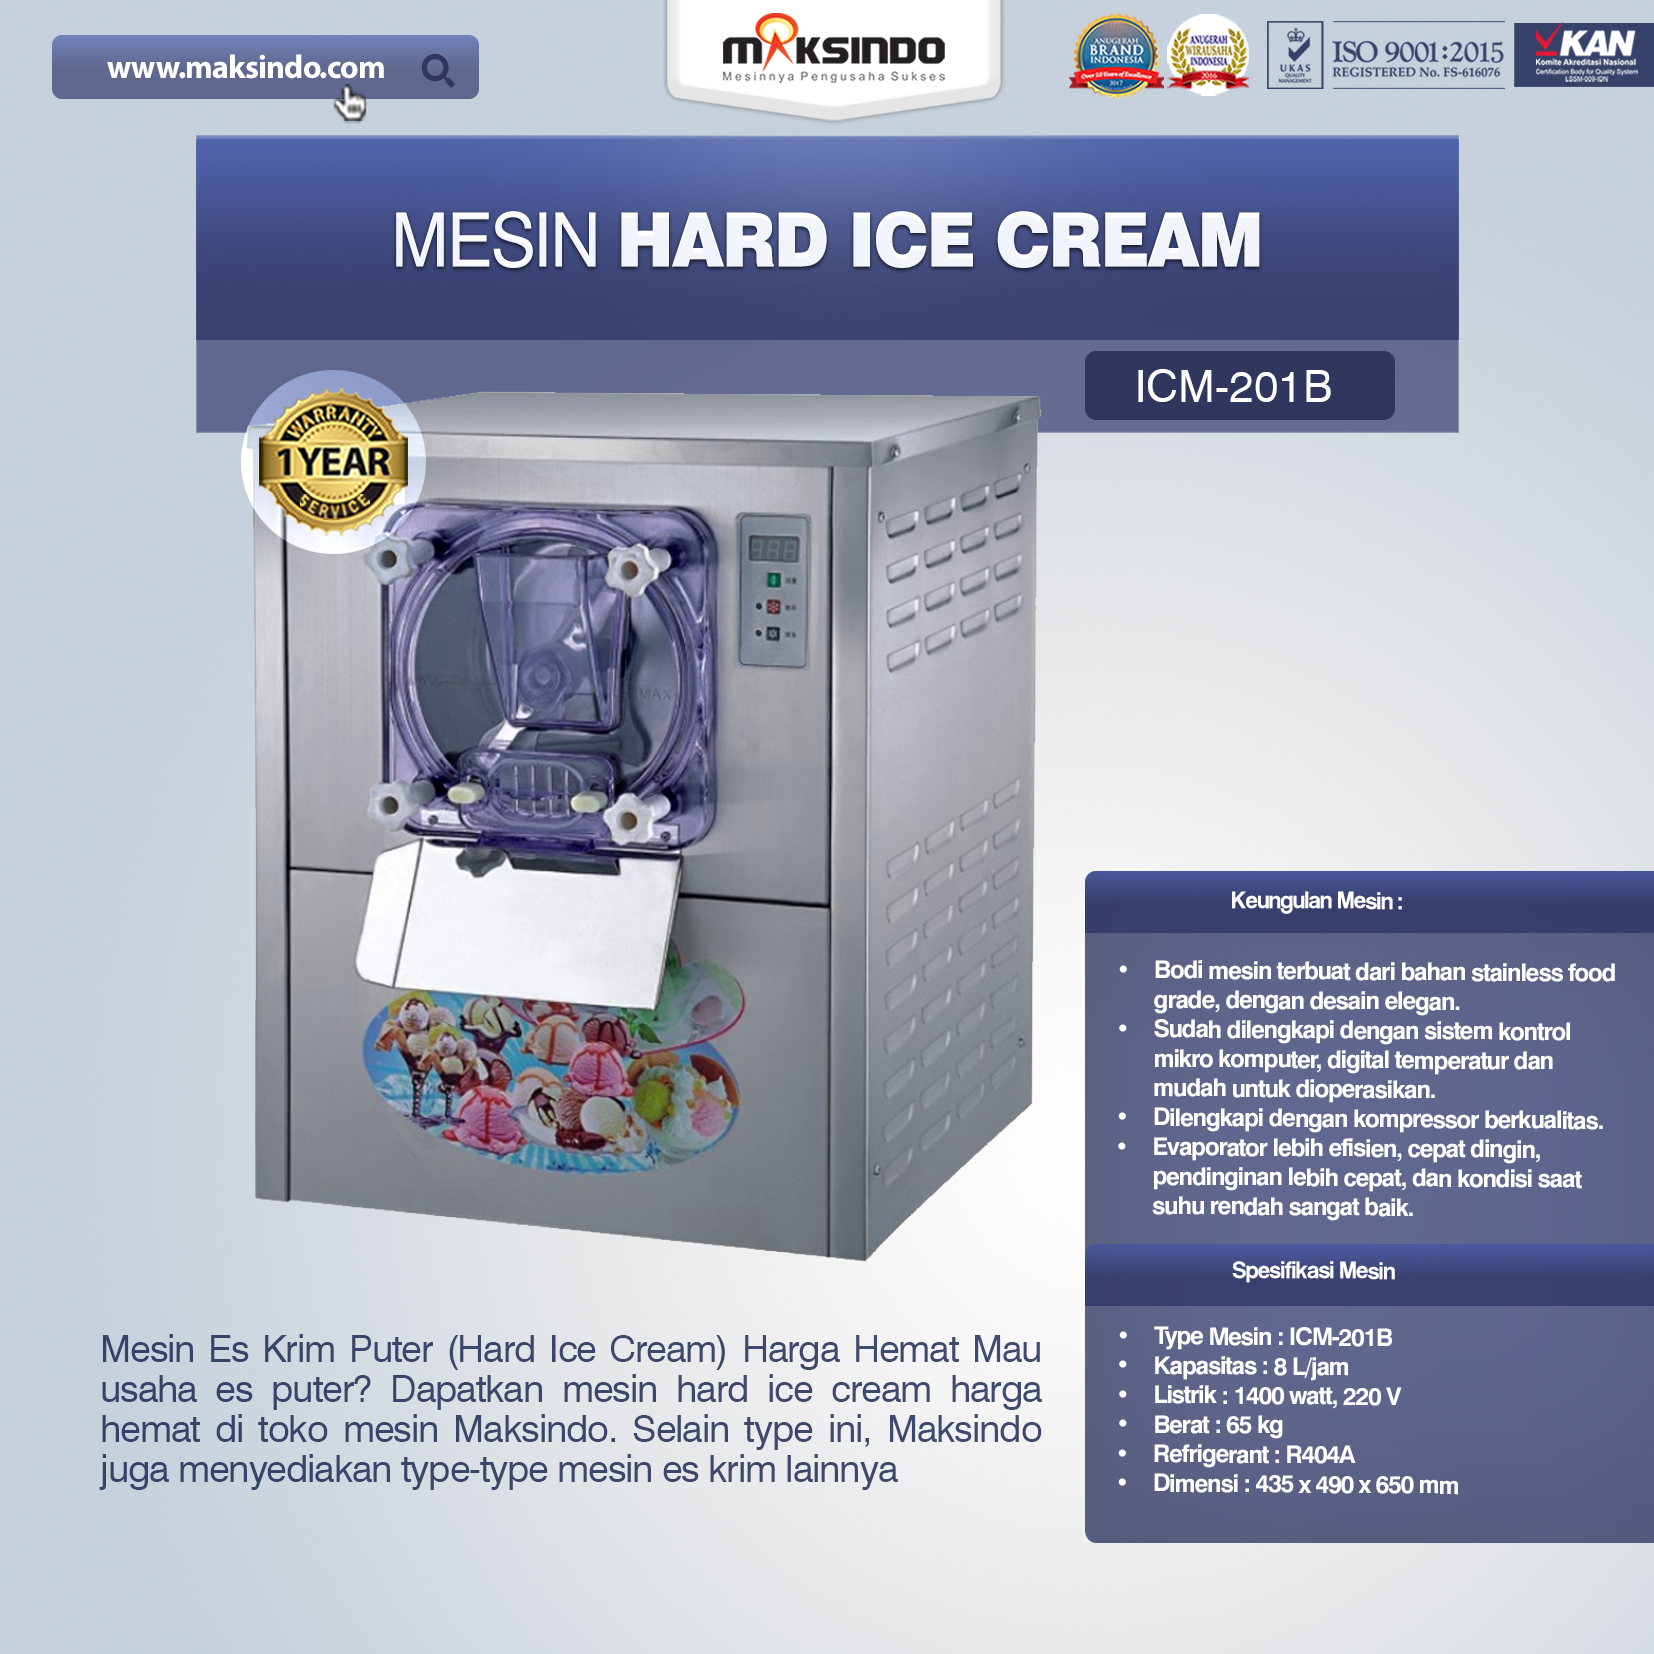 Jual Mesin Hard Ice Cream (ICM201B) di Palembang